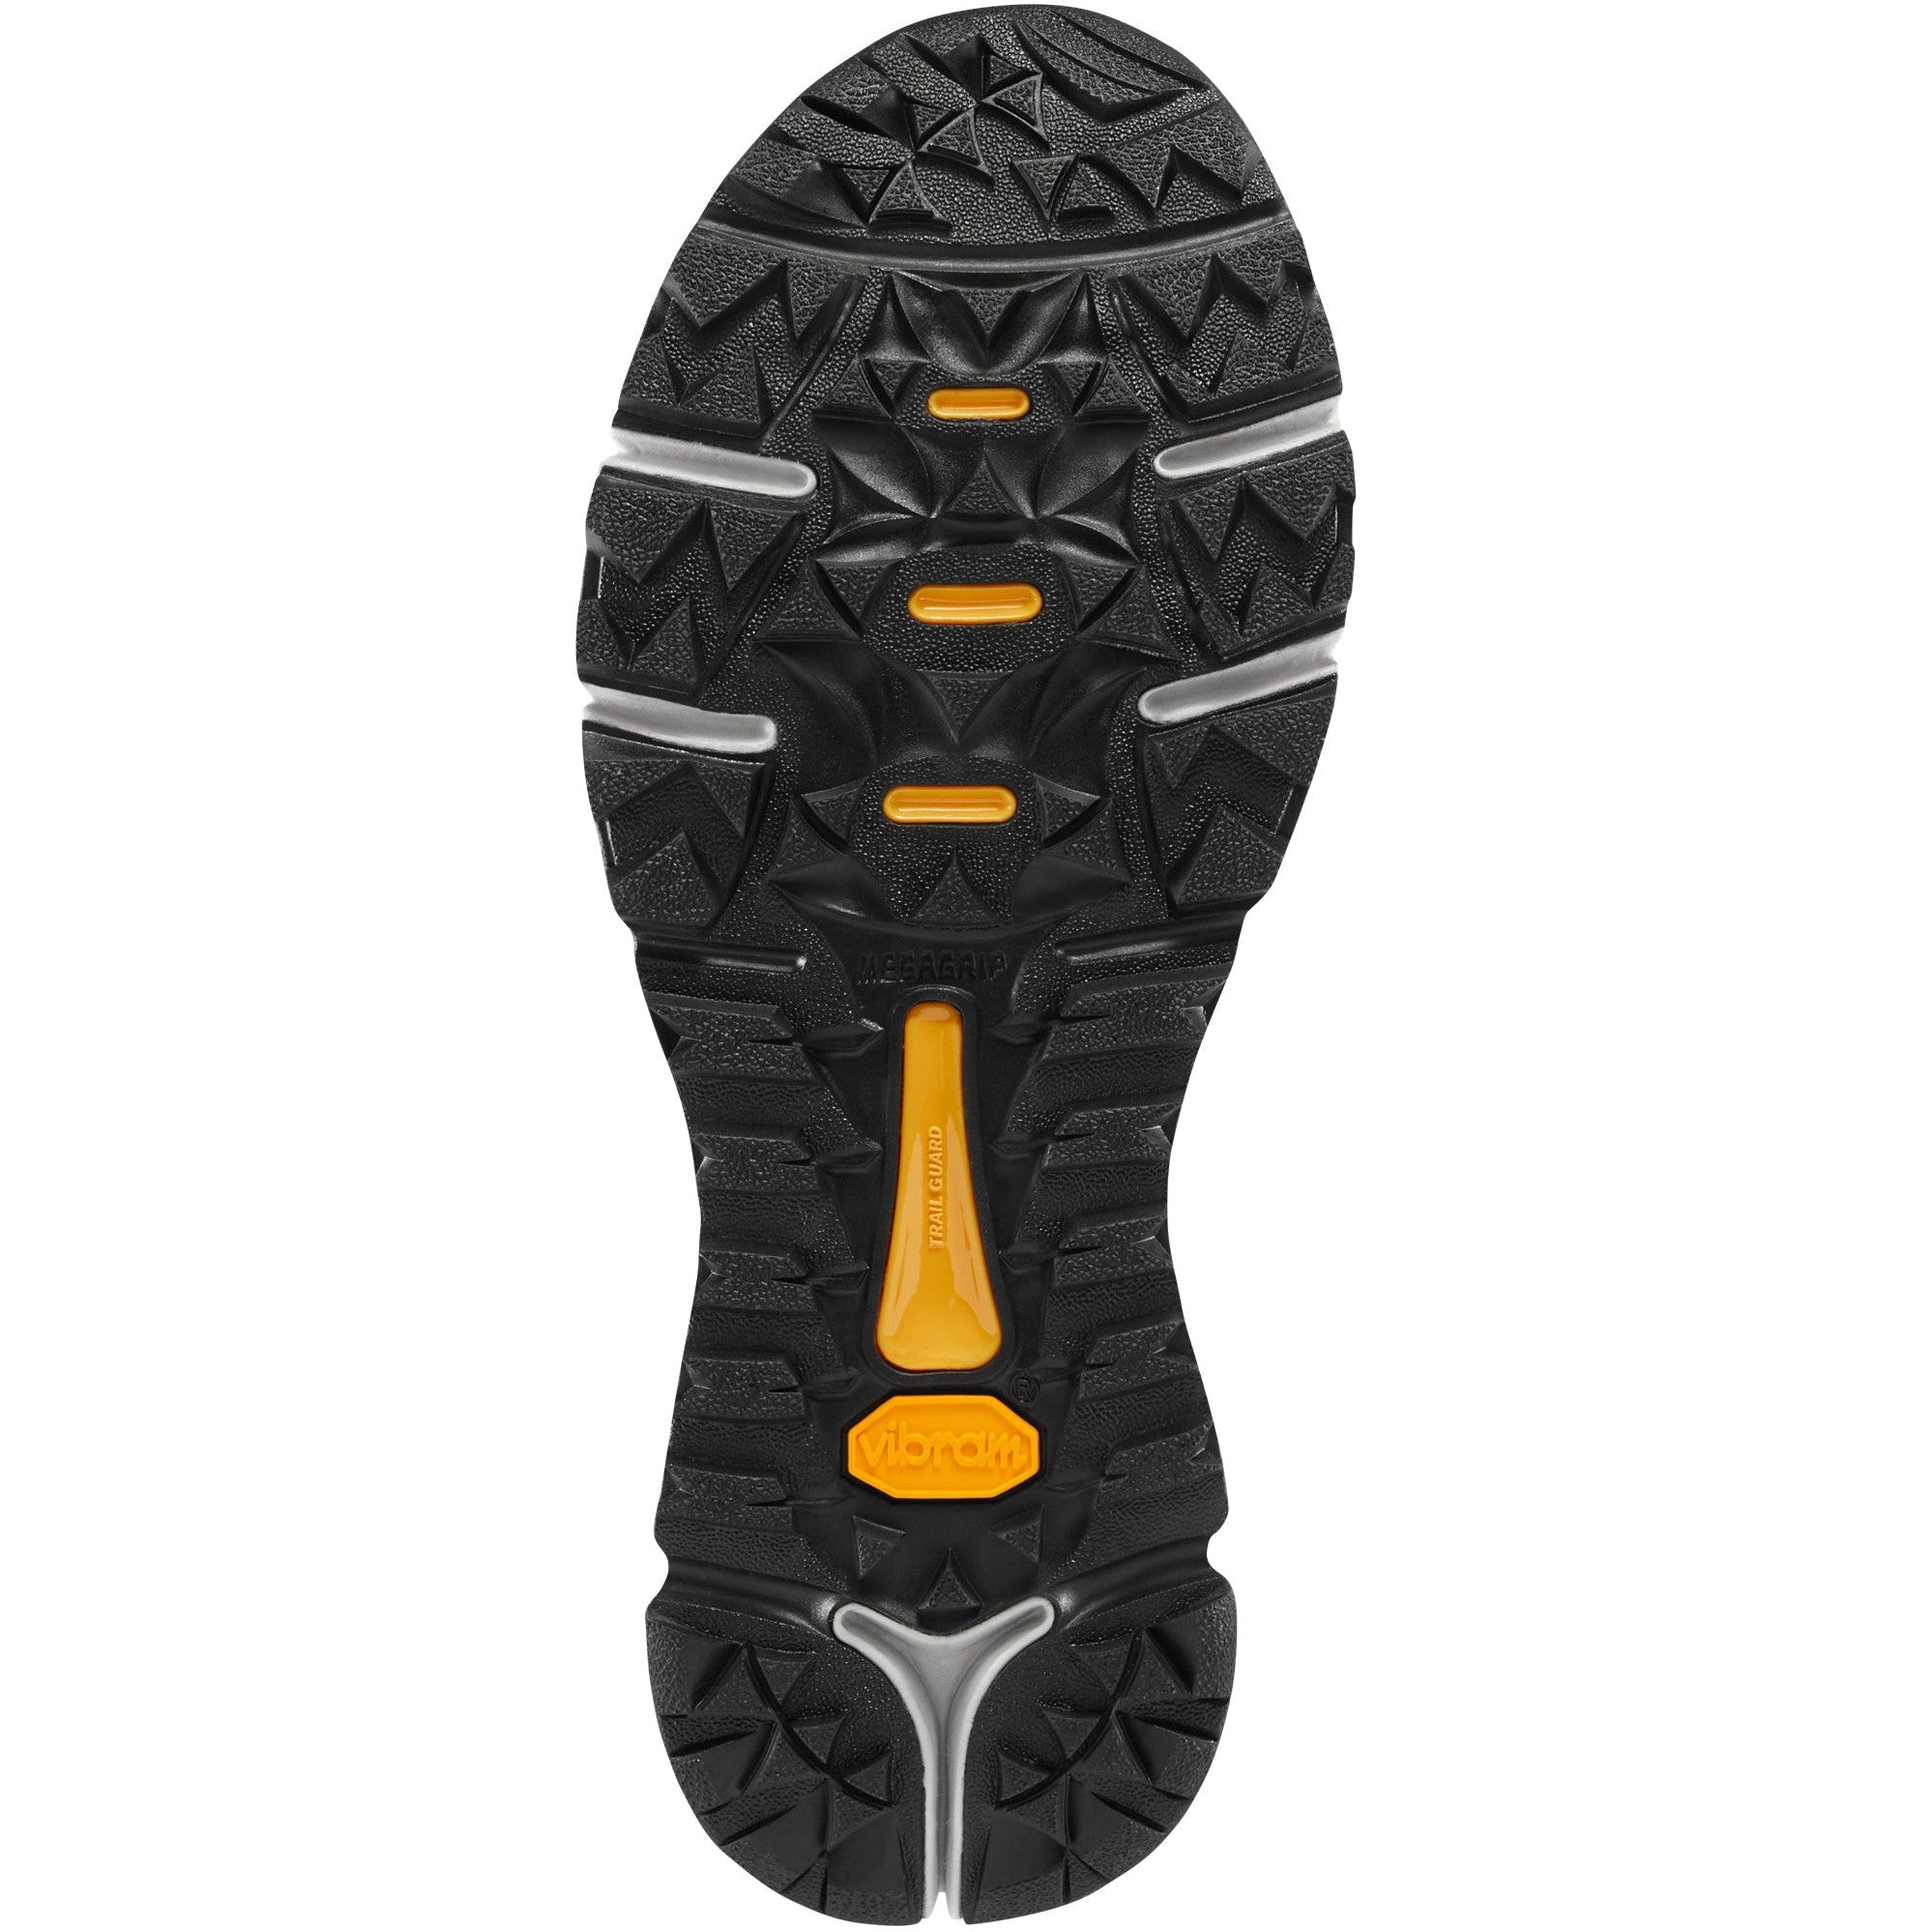 Danner Women's Trail 2650 3" Hiker Shoe - Gray/Blue - 61283  - Overlook Boots